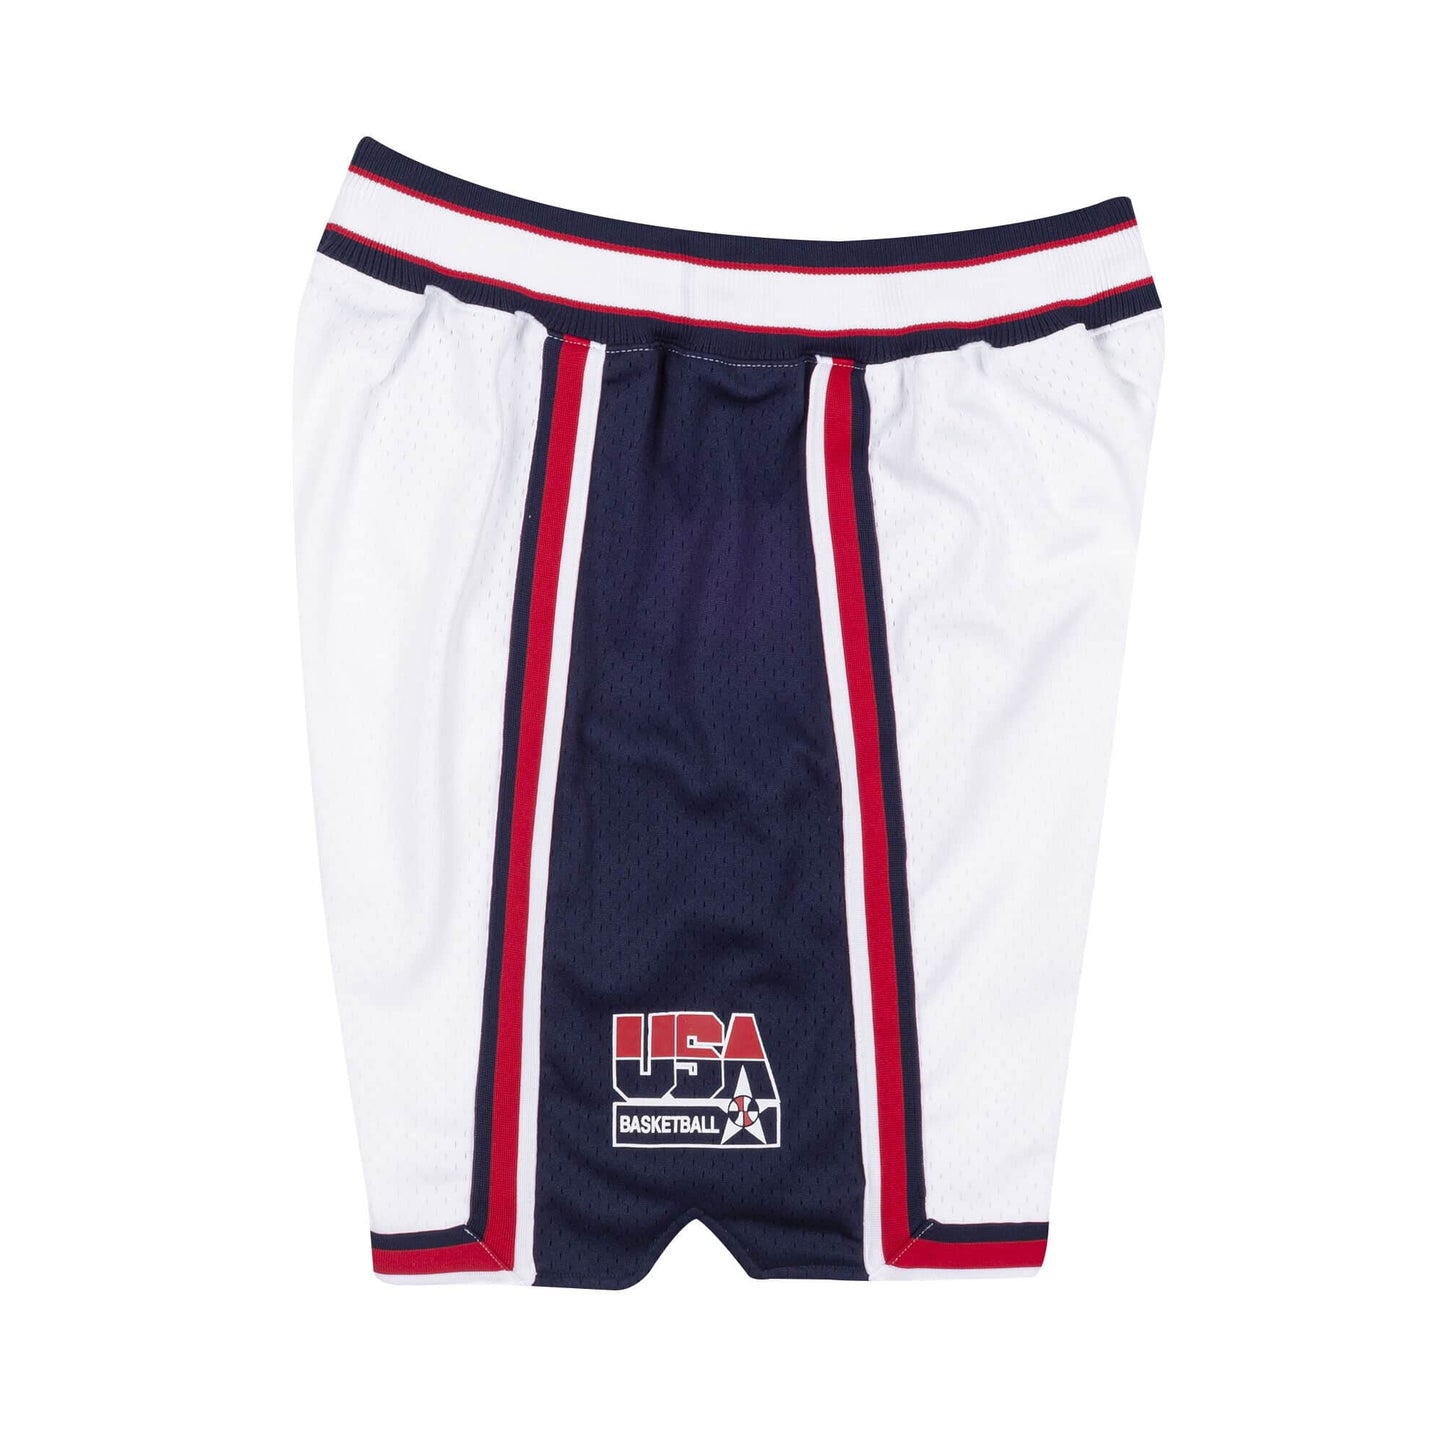 NBA Authentic Shorts Team USA 1992